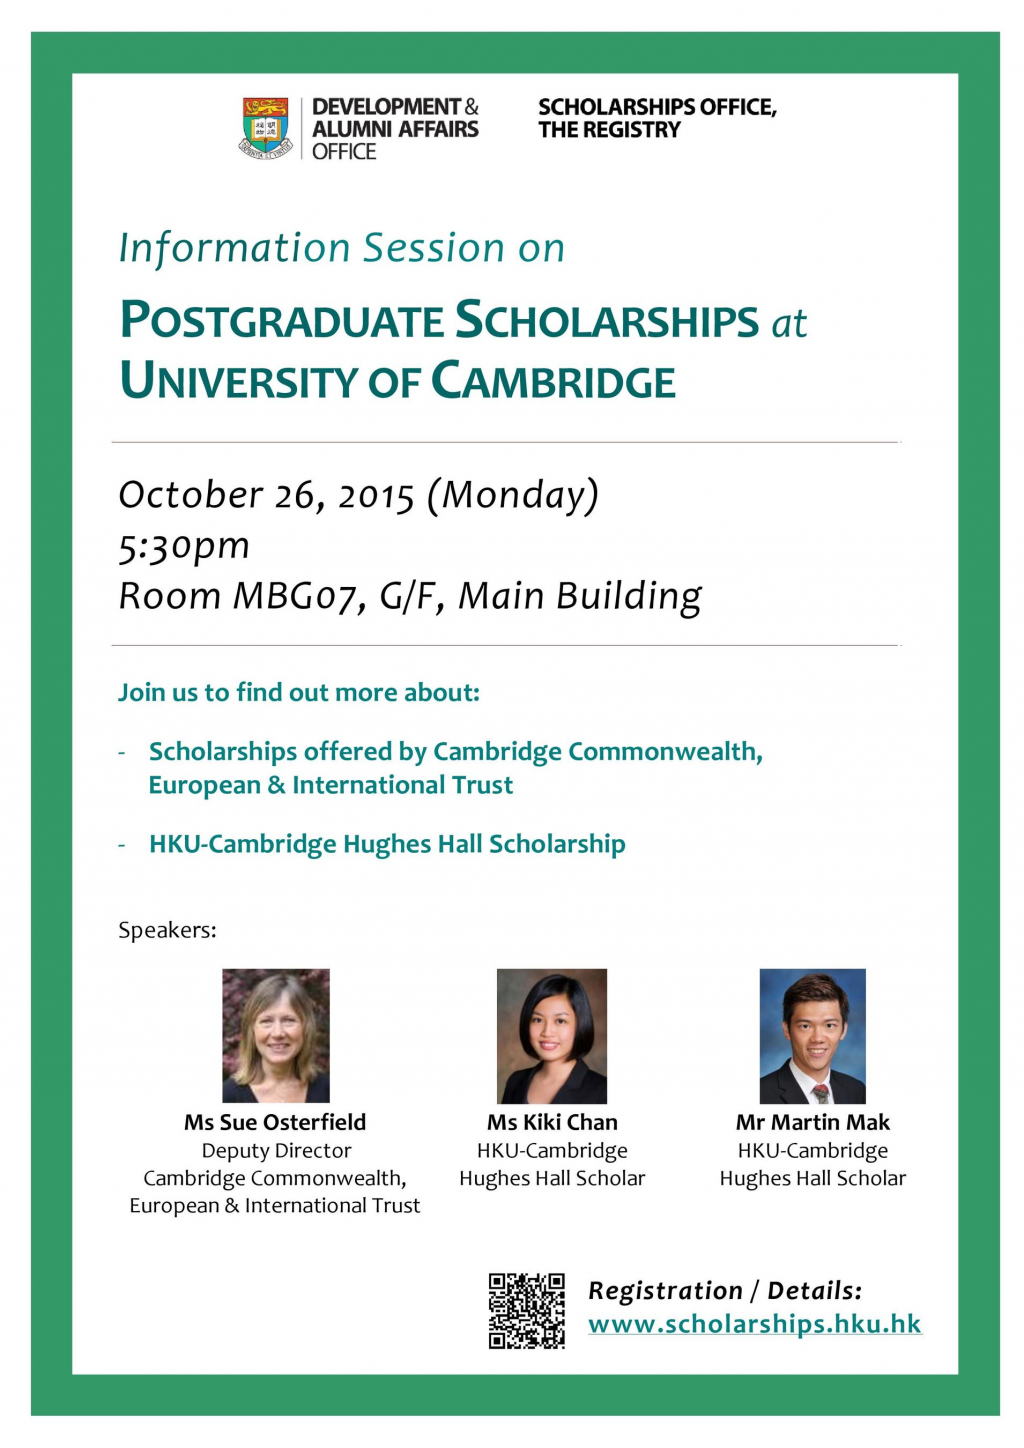 Information Session on Postgraduate Scholarships at University of Cambridge